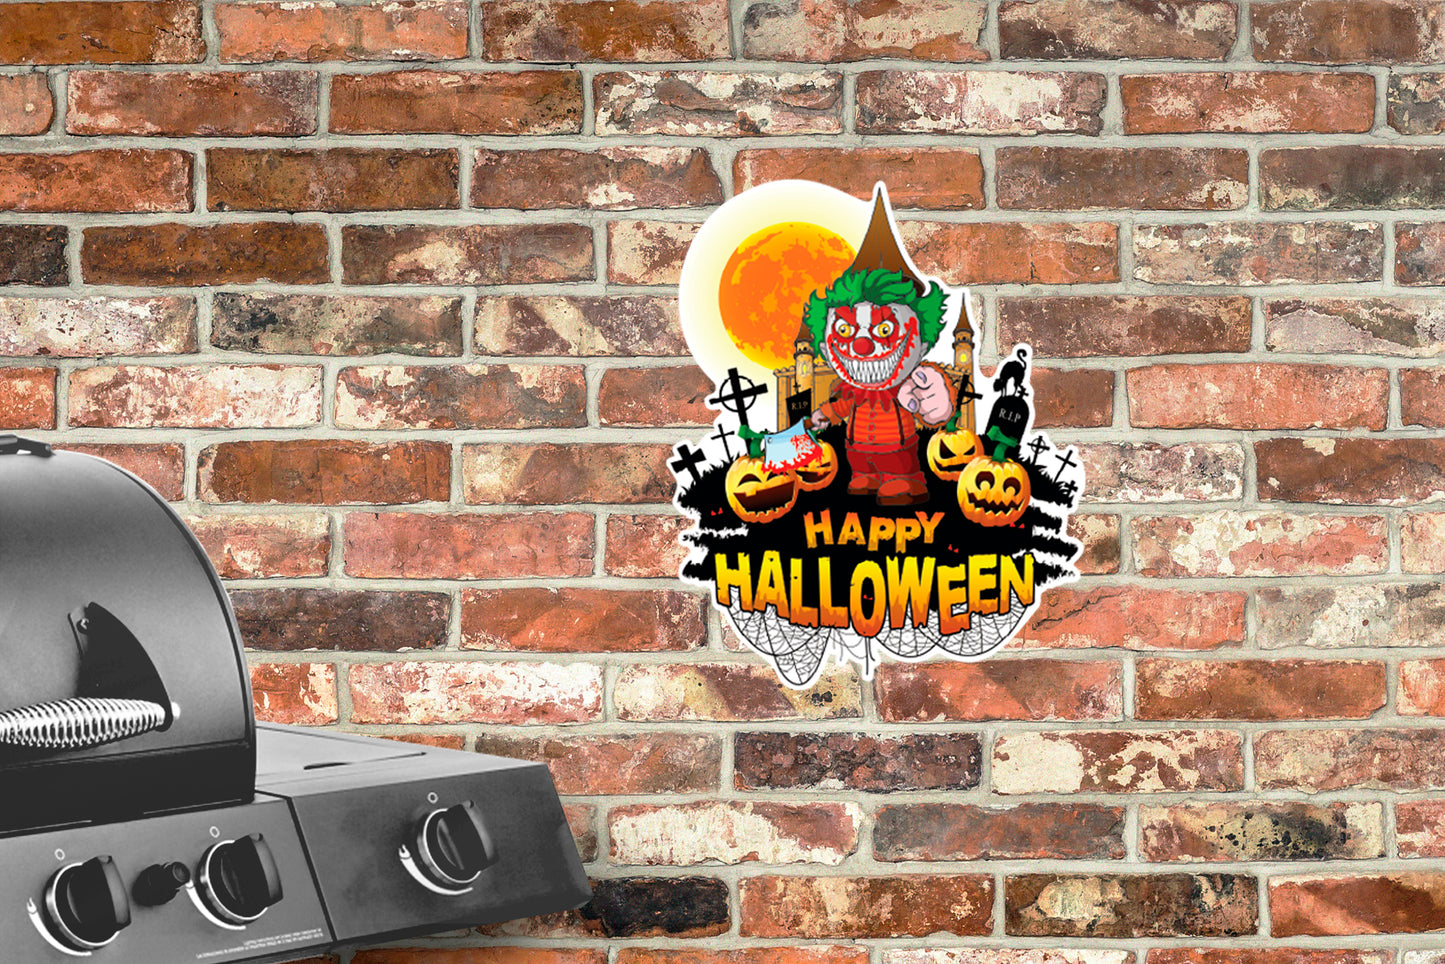 Halloween: Clowns Creepy Alumigraphic        -      Outdoor Graphic